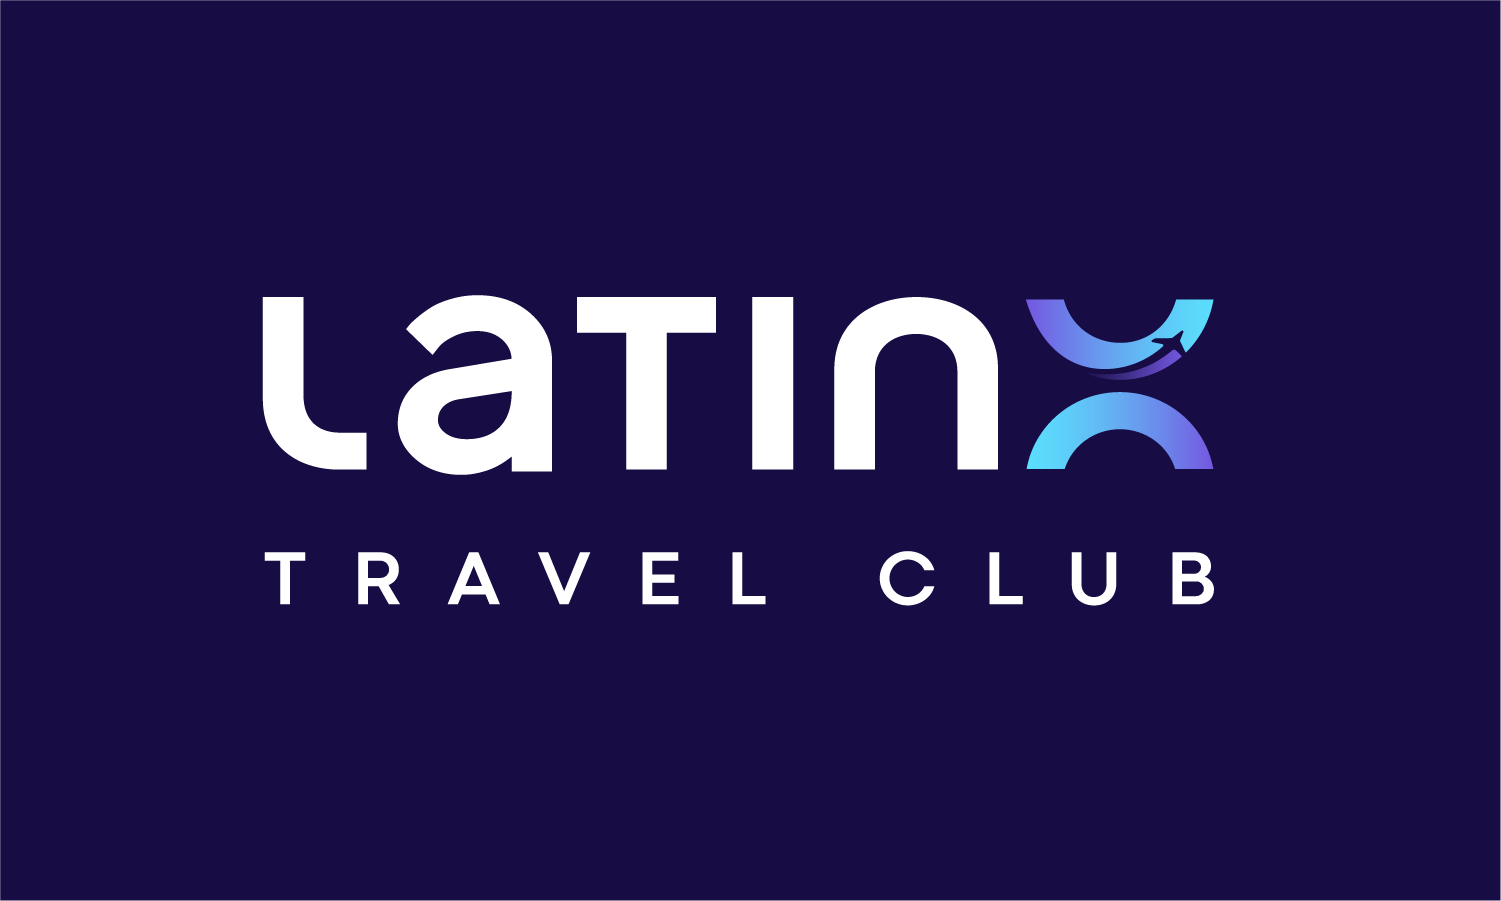 latinx travel club logo.png